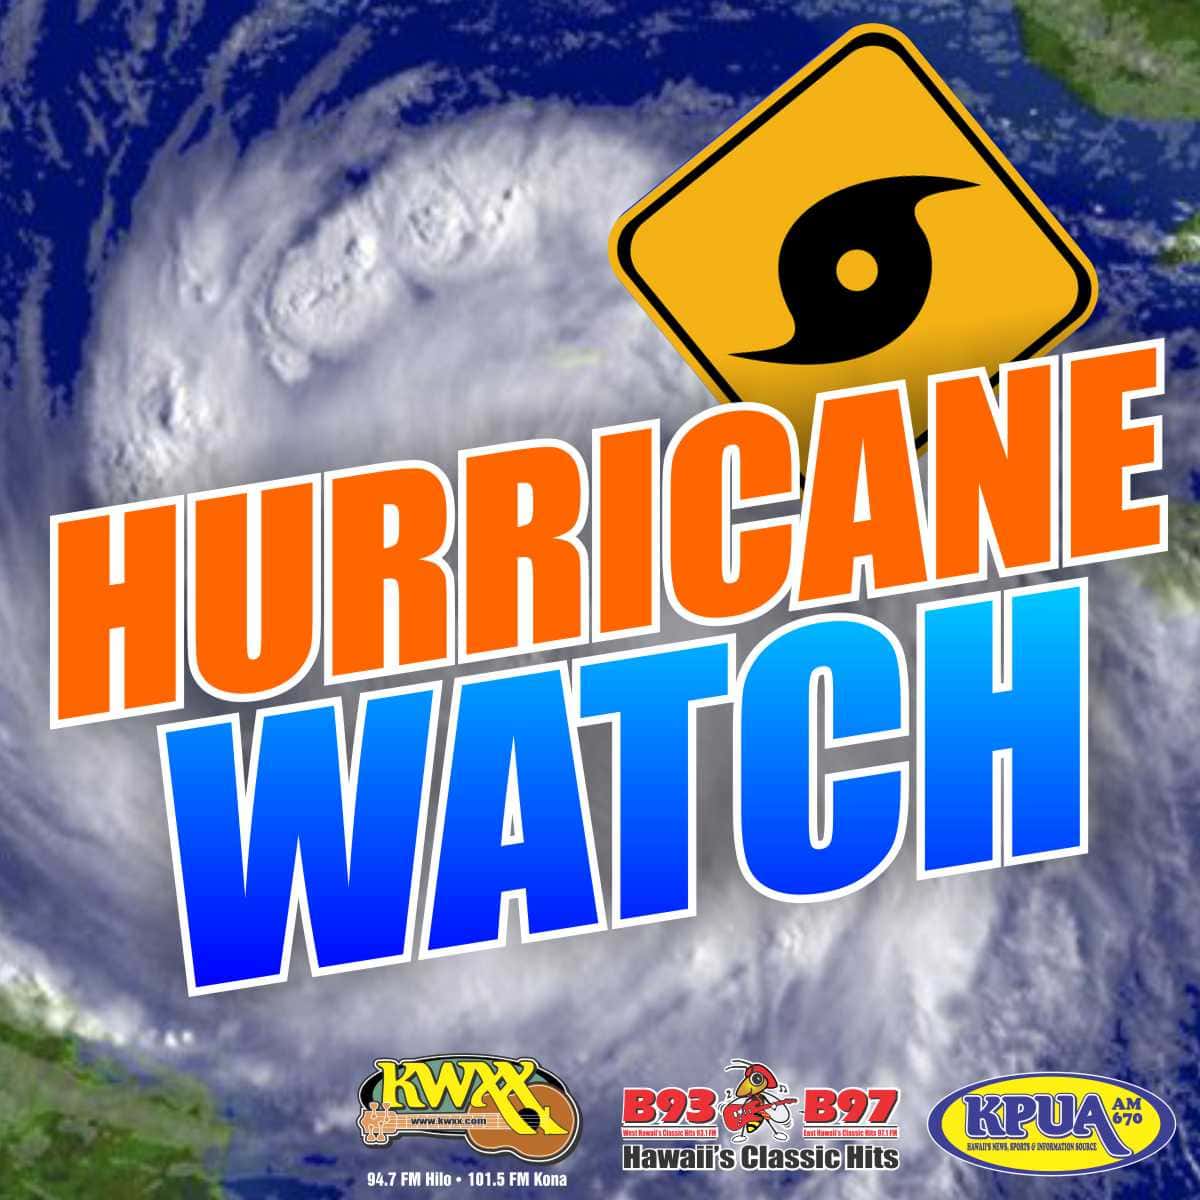 Hurricane Watch in effect for Douglas KWXX Hilo, HI